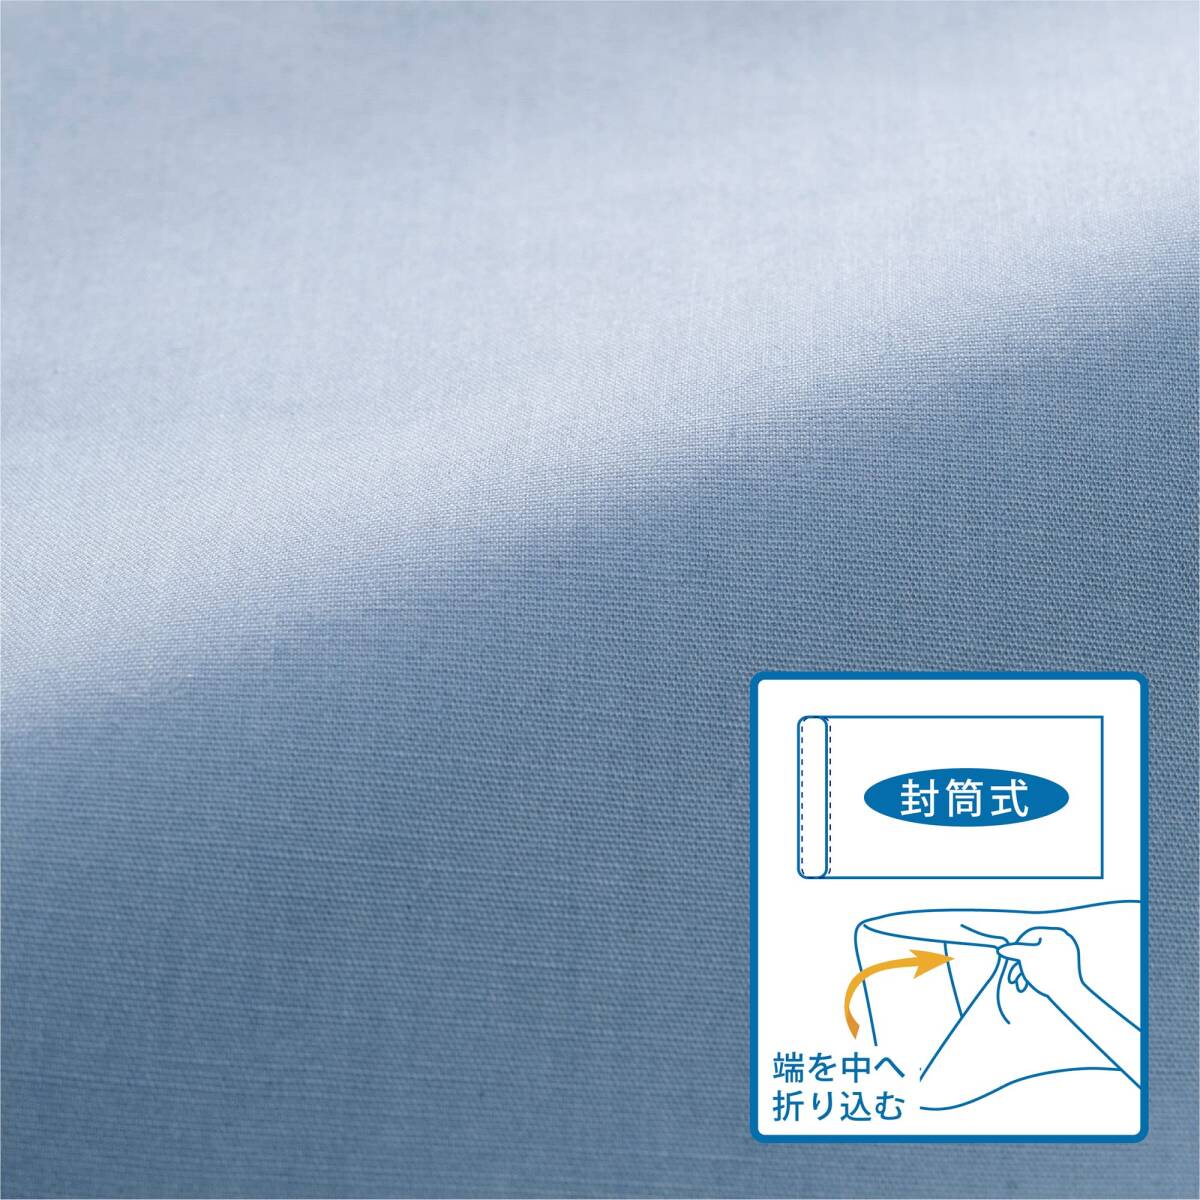 nishikawa【西川】 枕カバー ピローケース 63X43cmのサイズの枕に対応 ワイドサイズ 洗える 肌に優しいコットン100% ブロード_画像3